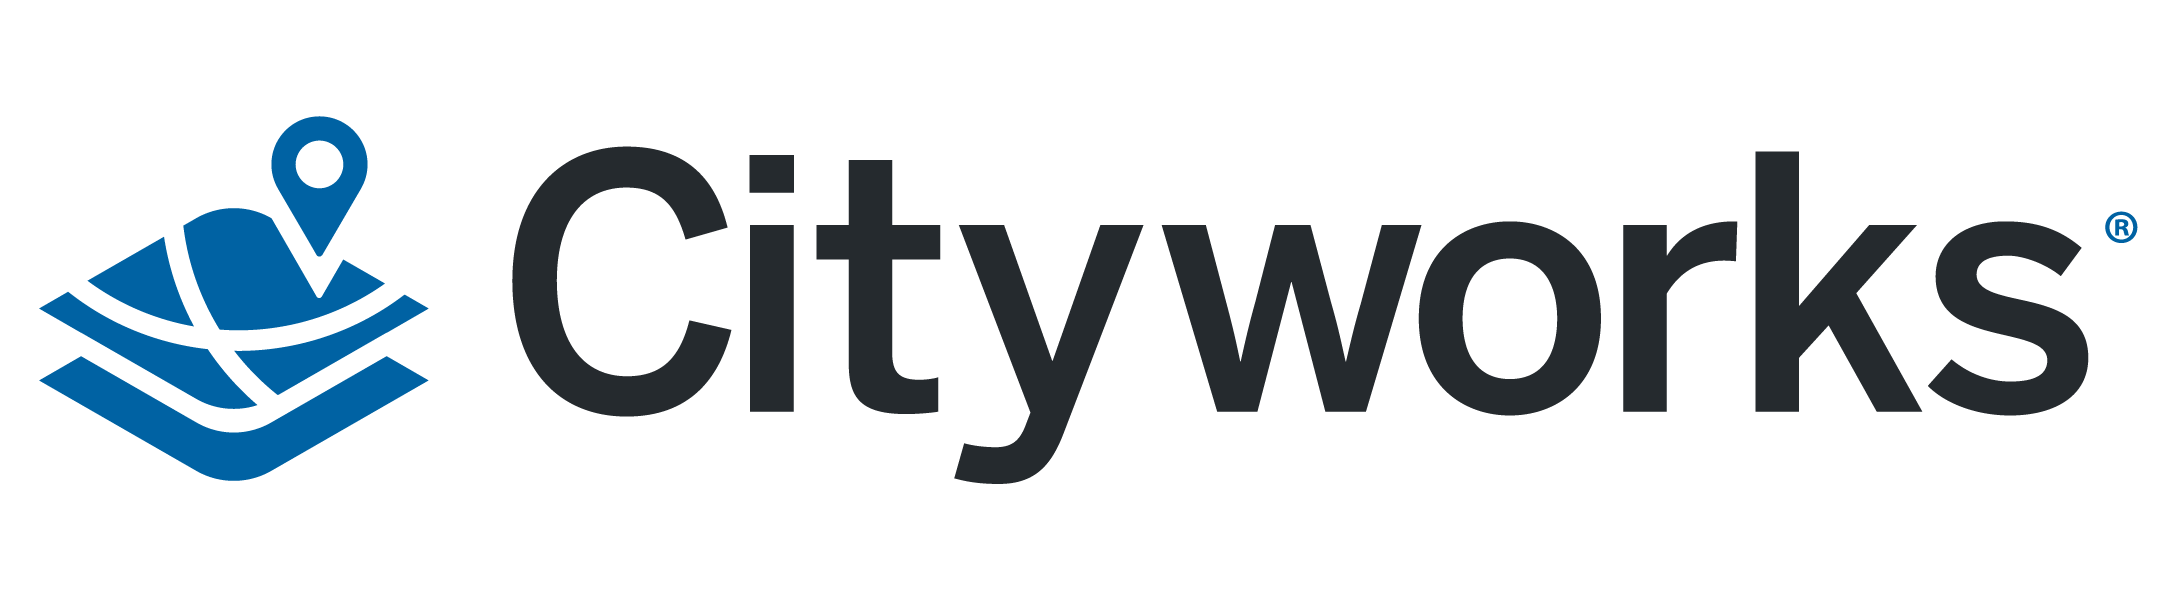 Cityworks Logo-1